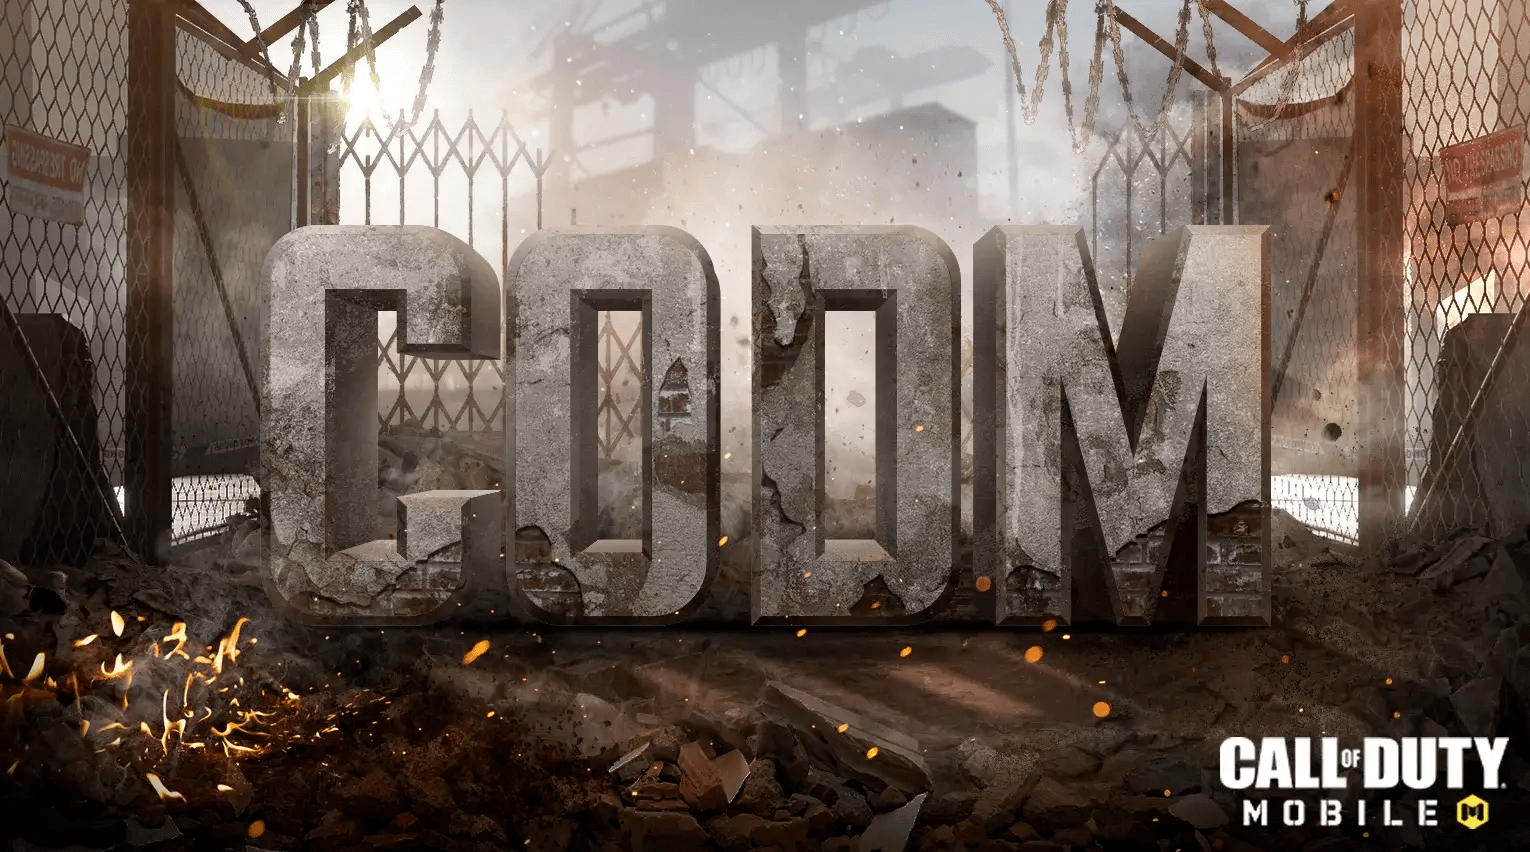 Download Call of Duty Mobile 1.0.20 APK + OBB Files | CODM Season 2 Update